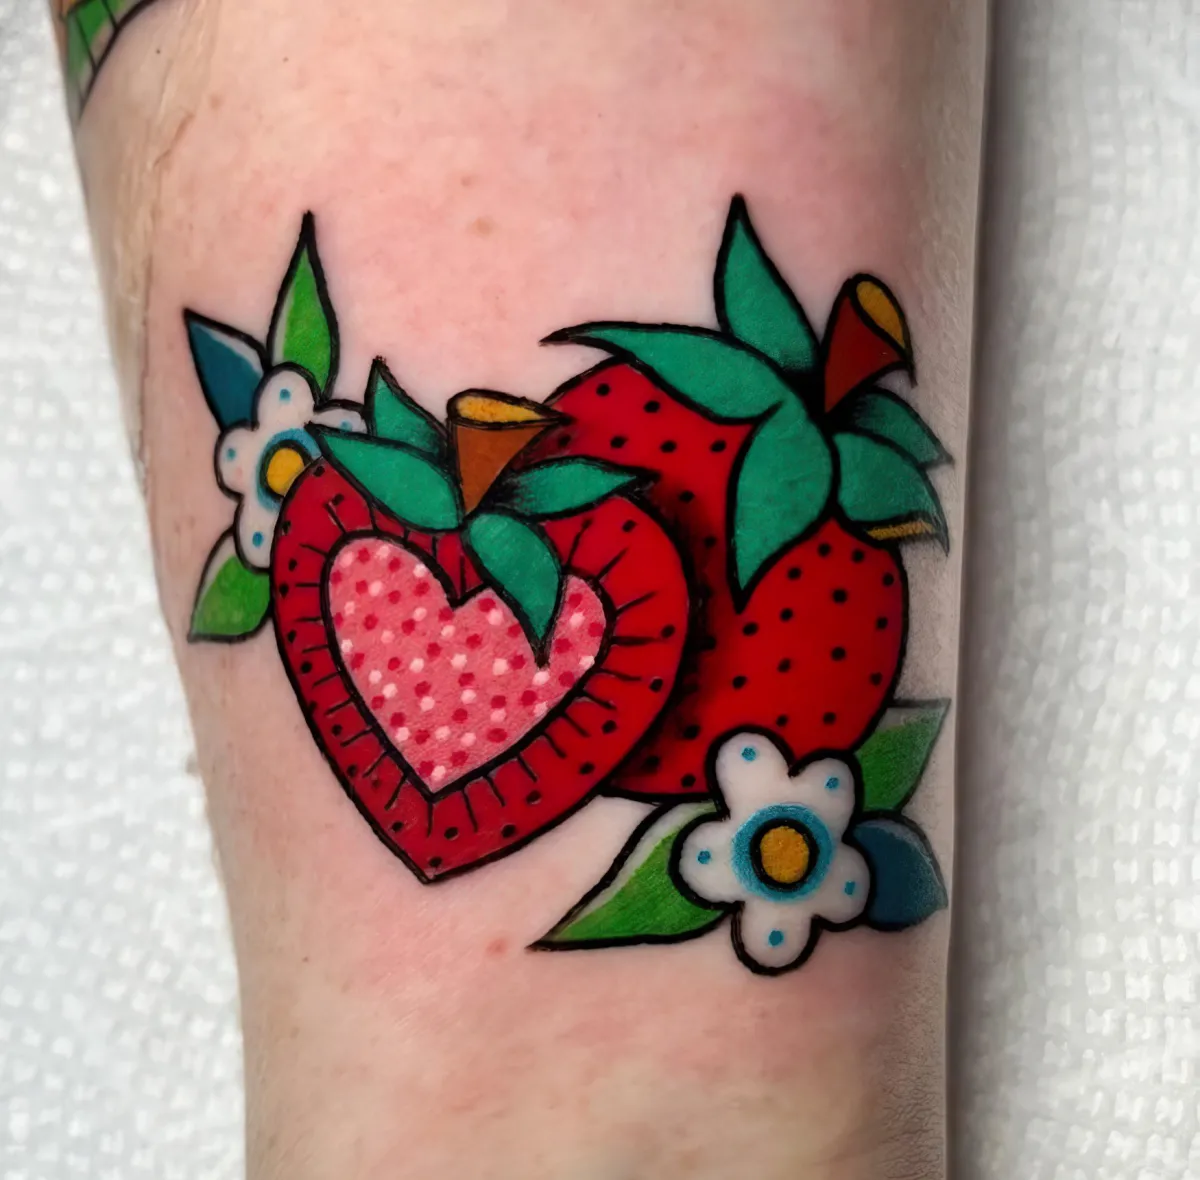 erdbeeren tattoo herzenformig farbig kleine weiße blüten